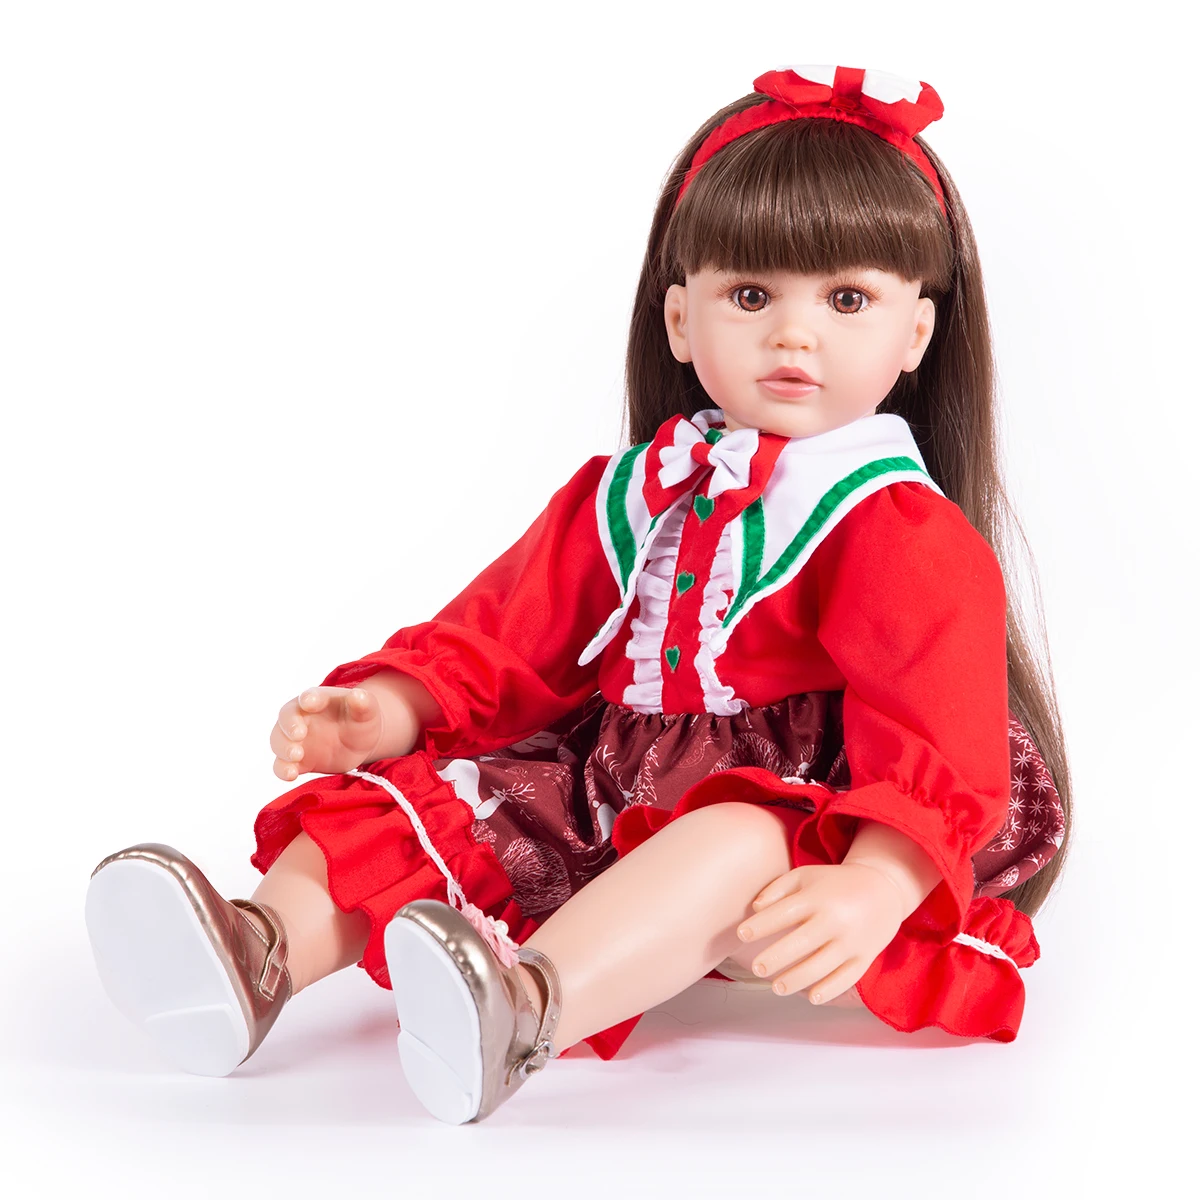 

60CM Huge doll baby reborn toddler princess doll long hair girl lifelike silicone vinyl bebe bonecas children gift toys